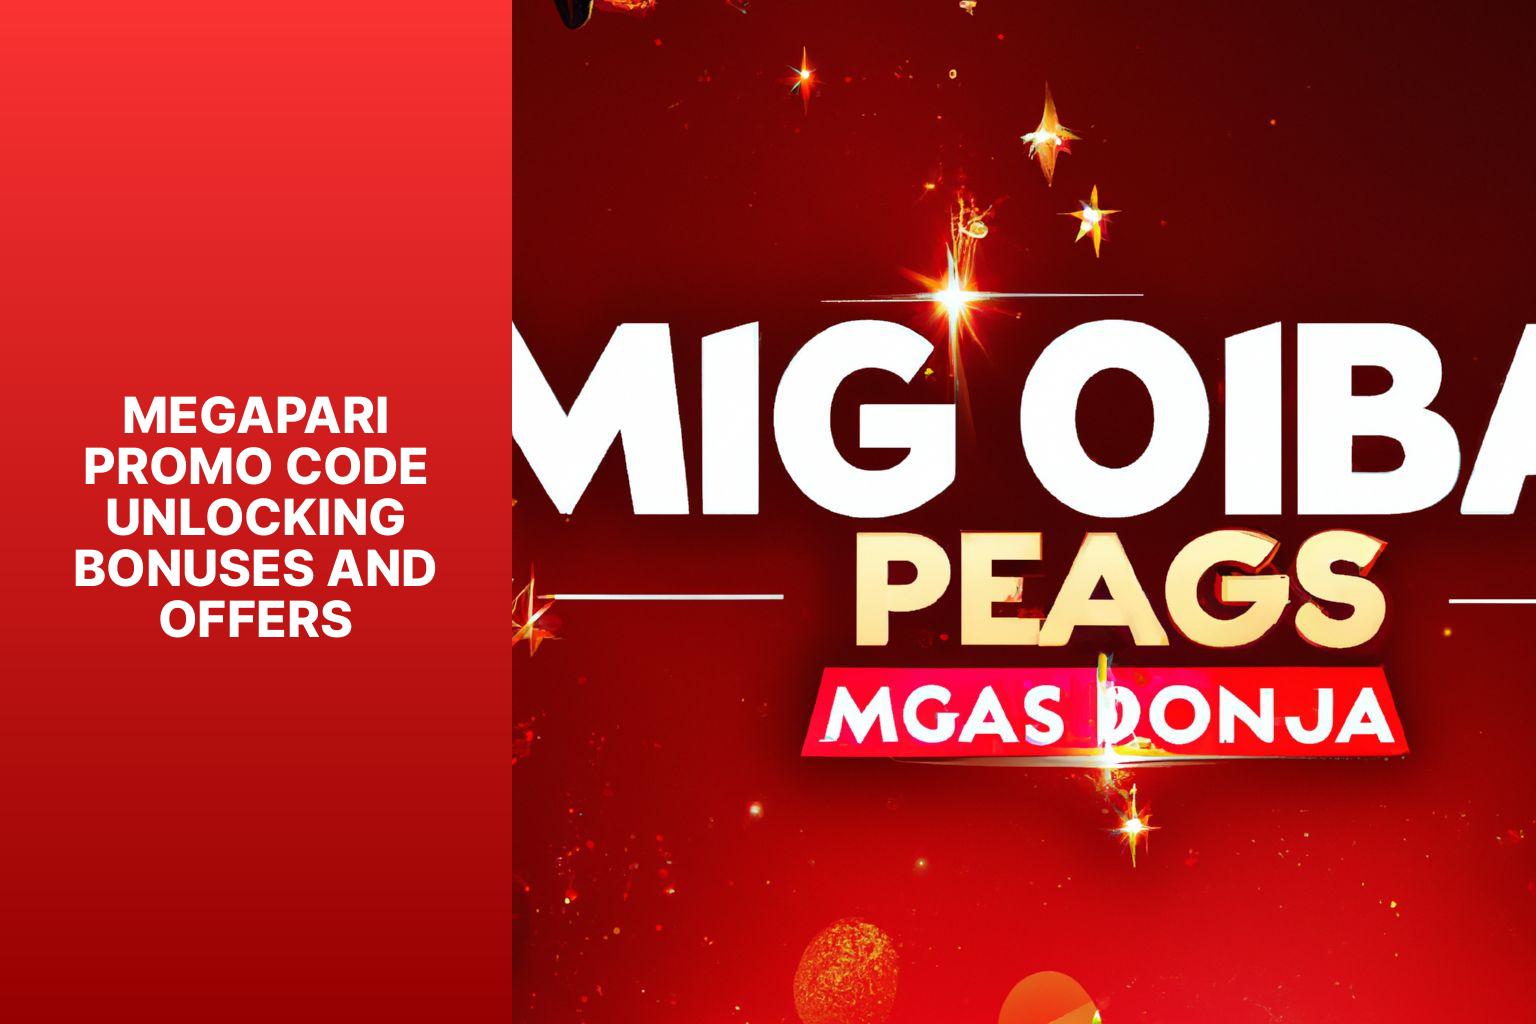 MegaPari Promo Code Unlocking Bonuses and Offers